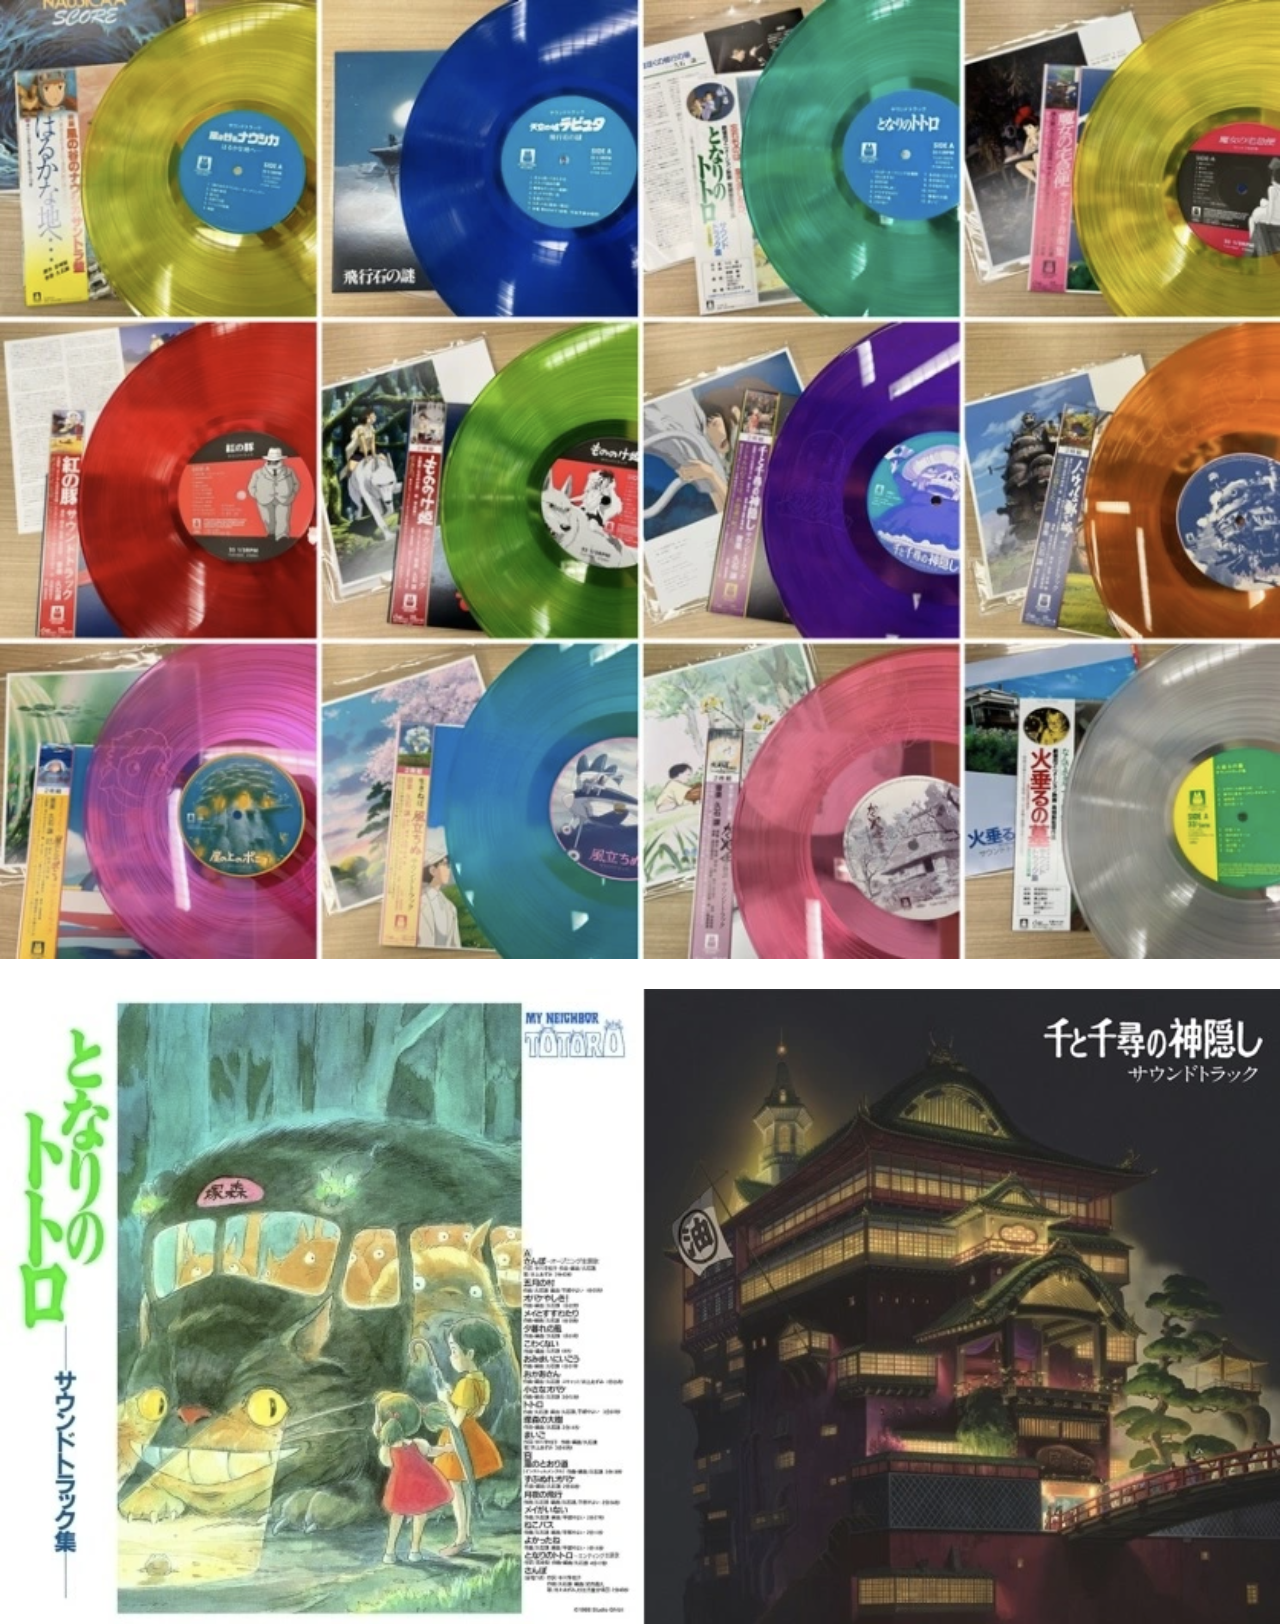 Studio Ghibli releases beautiful color vinyl record anime